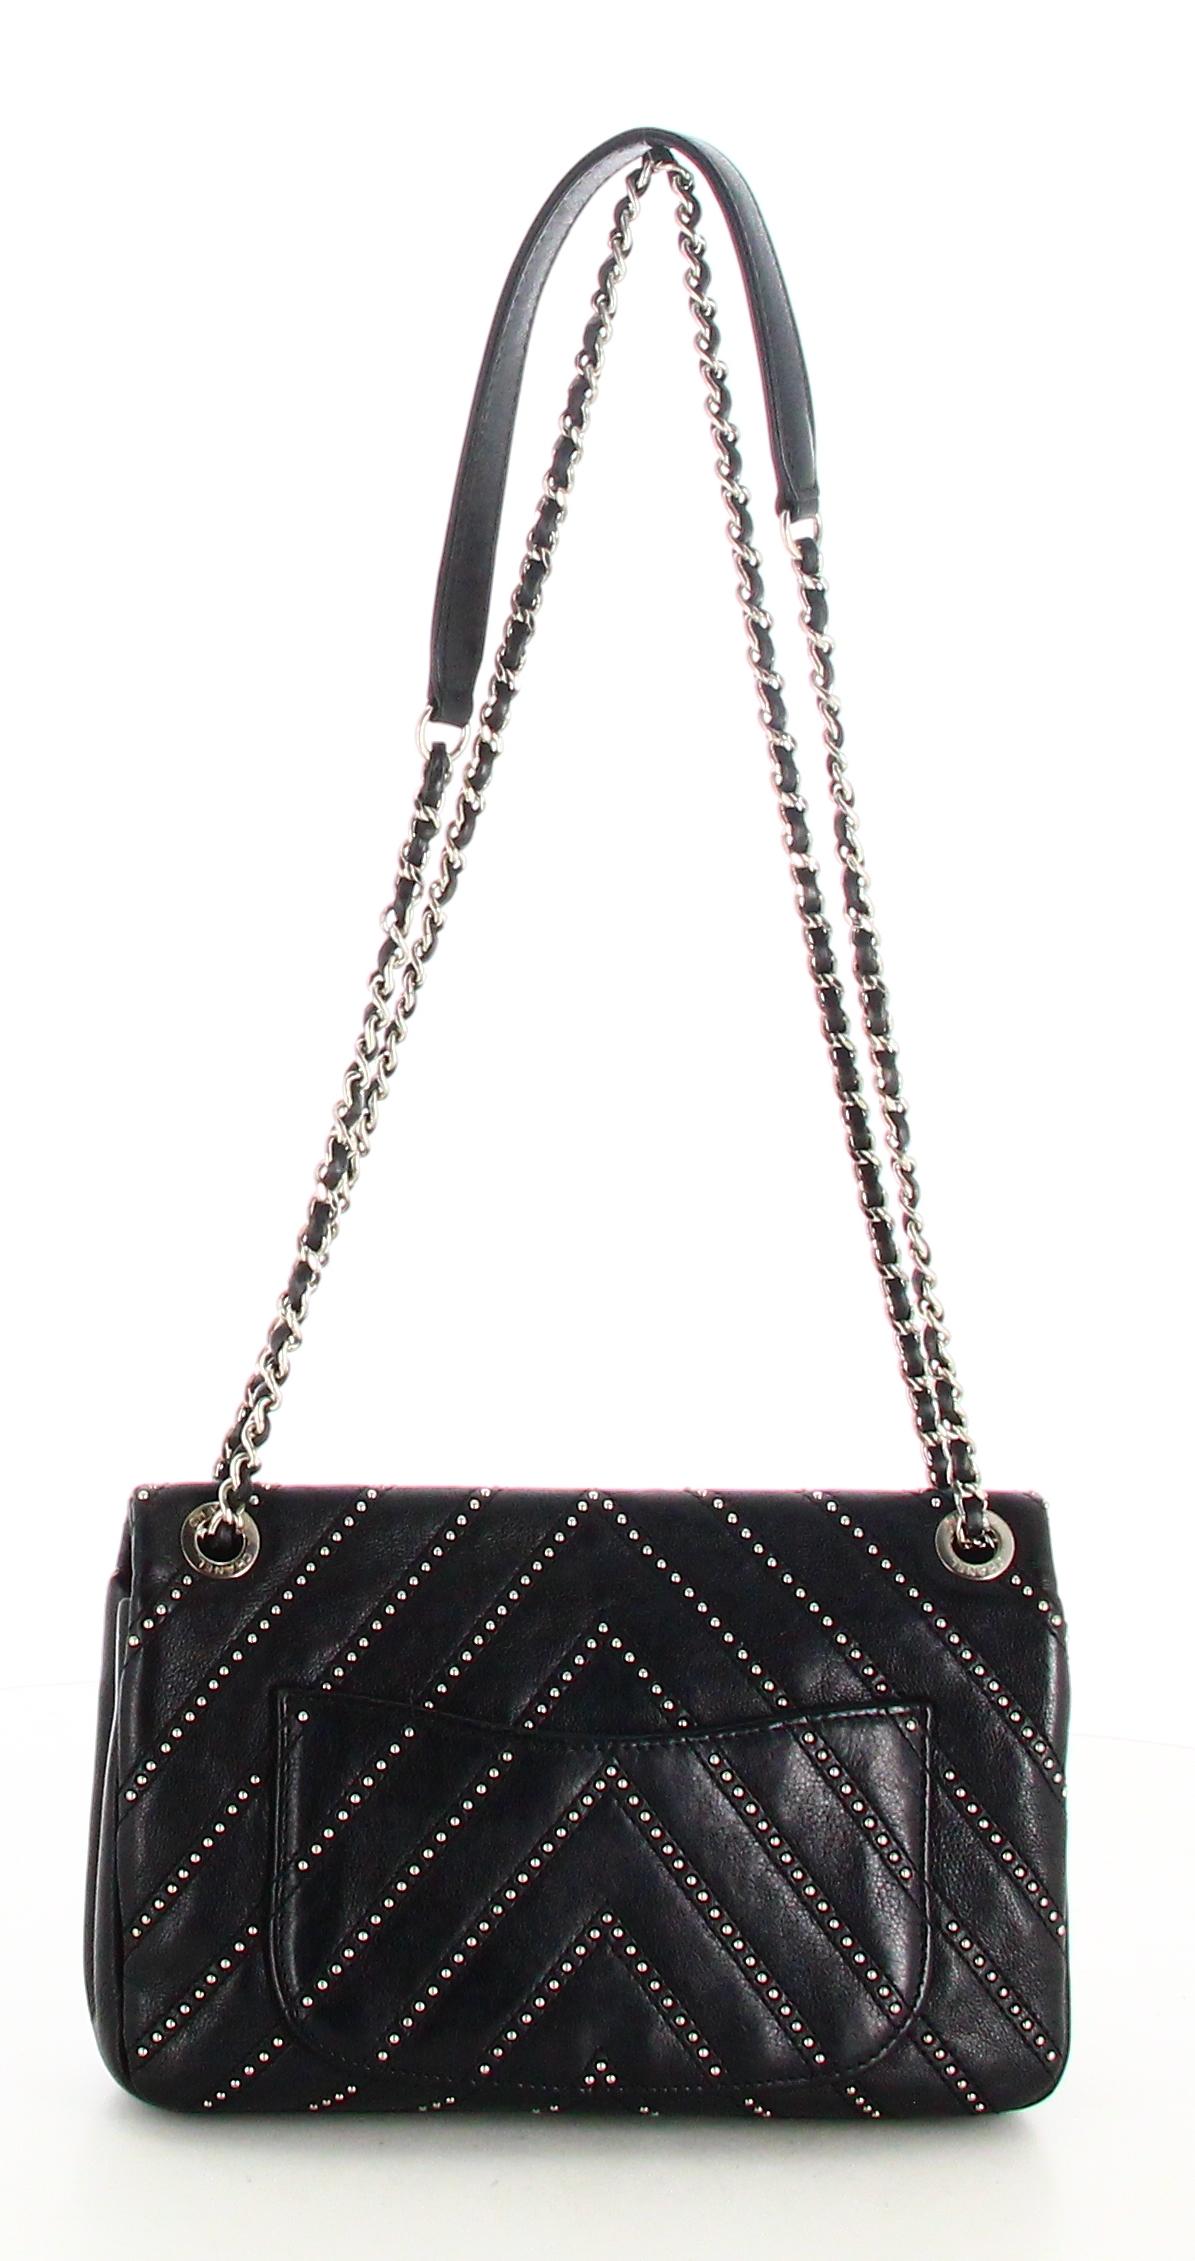 2017 Chanel Mini Handbag Chevron Stud Wars Flap Leather Black For Sale 1